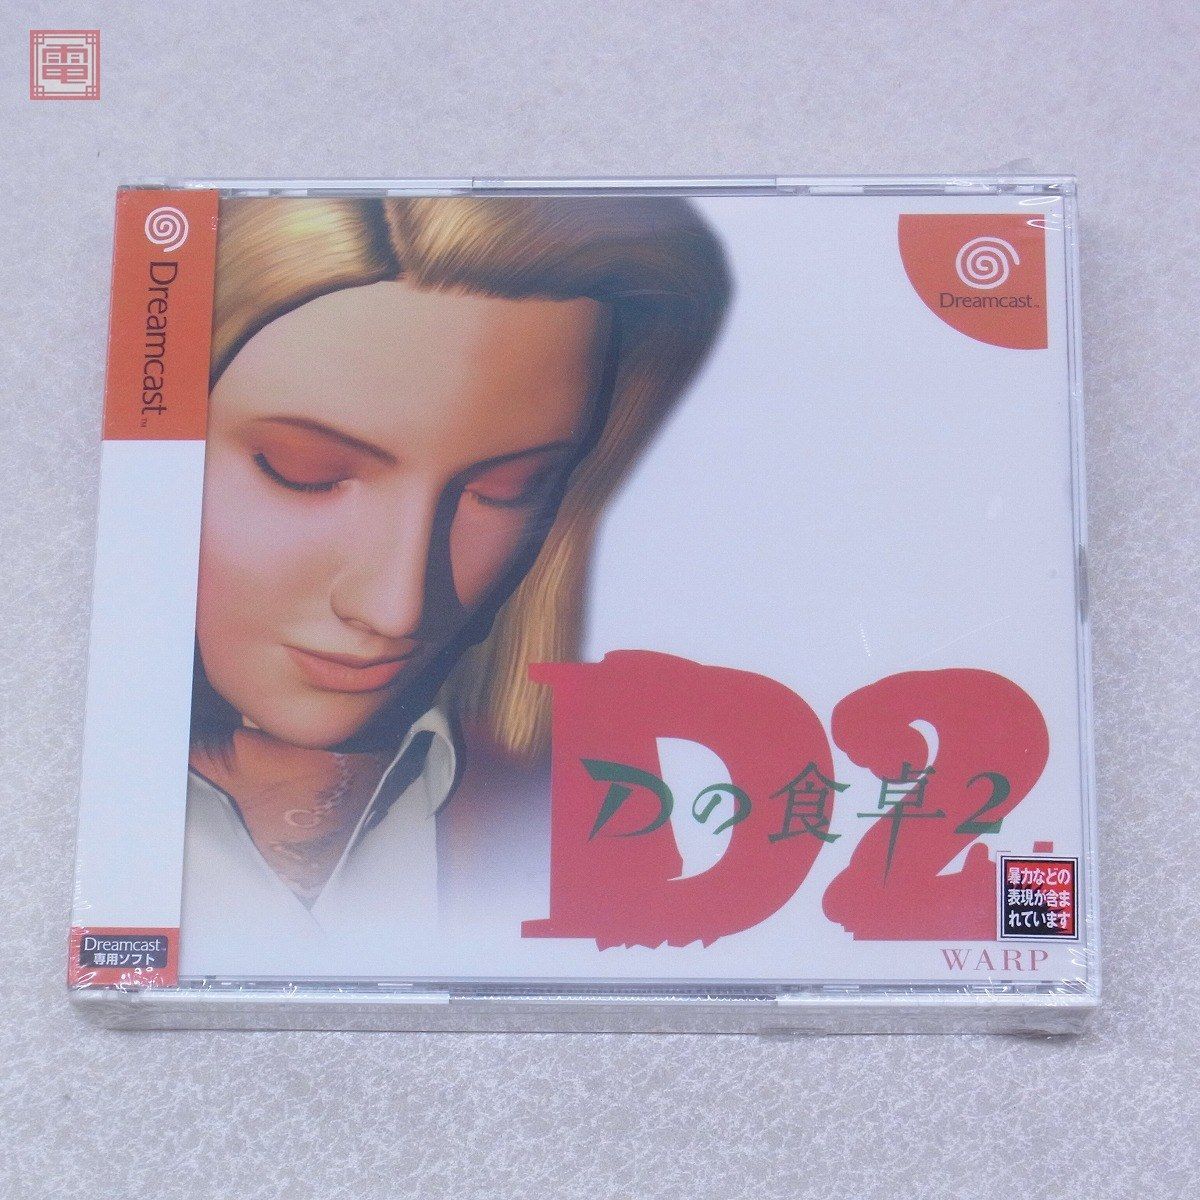 DC体験版ソフト Dの食卓2 Dreamcast magazine vol.4 セガ ドリーム